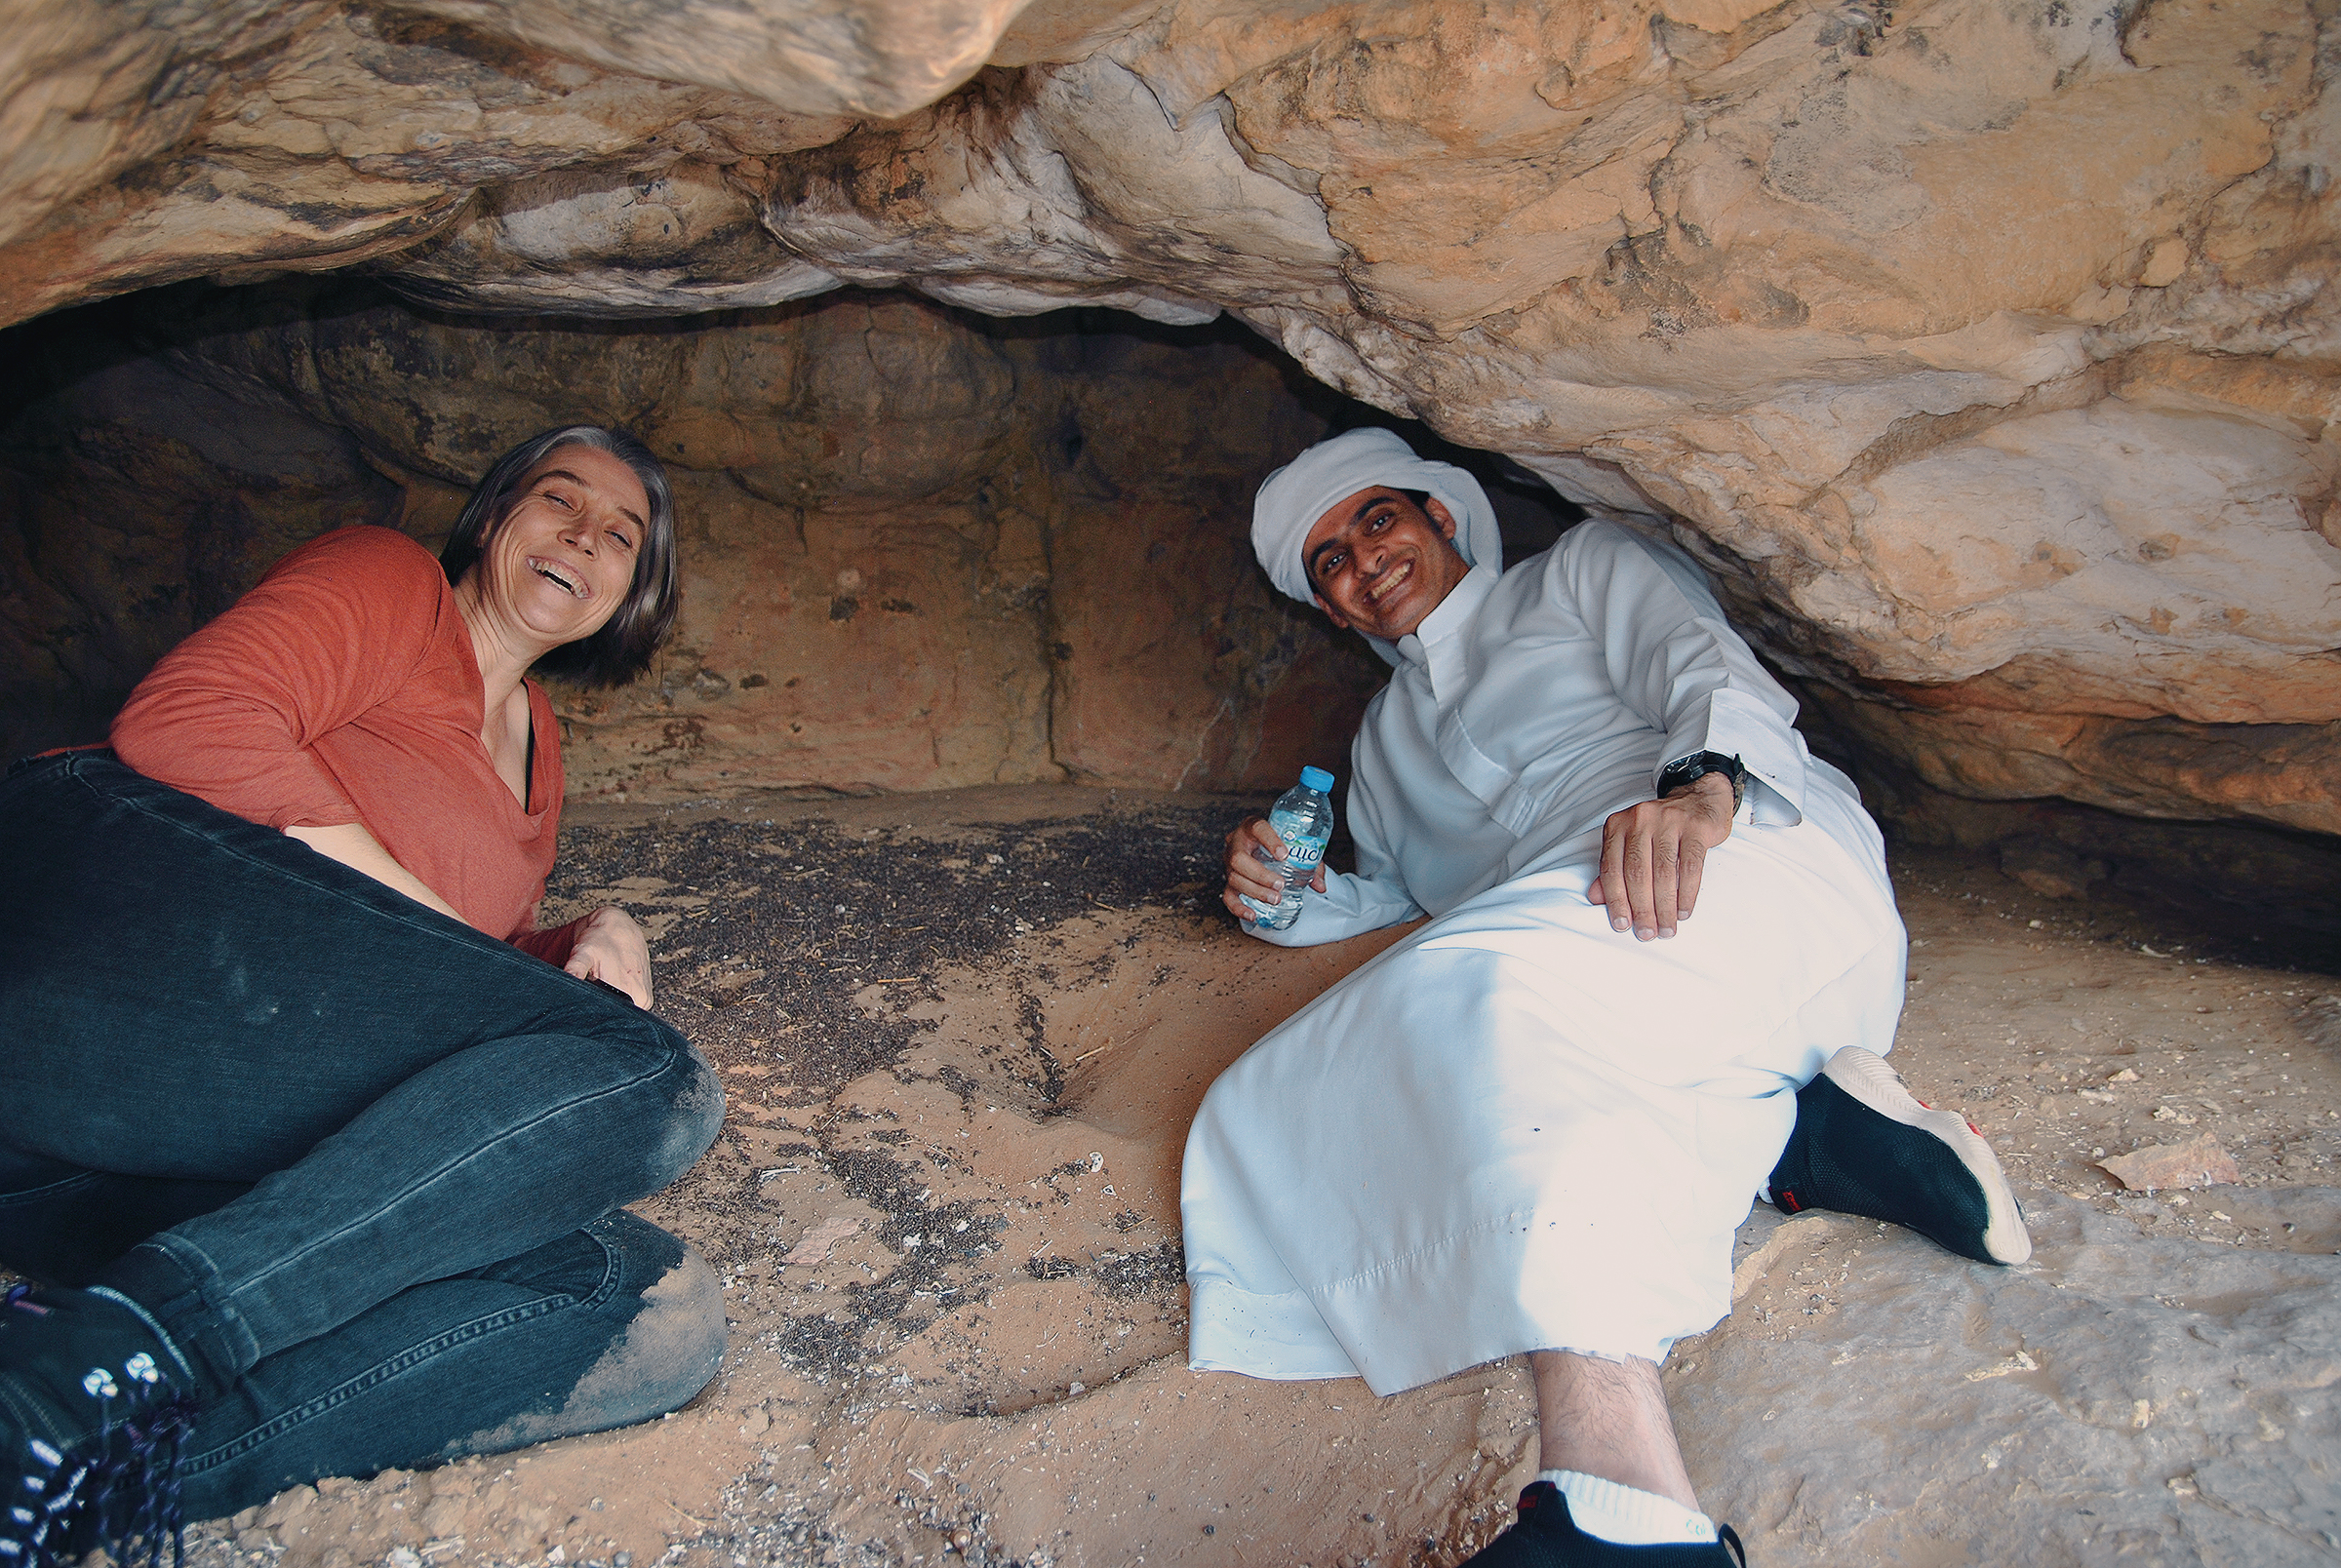 Rock art prospection and recording at Jebel Hafeet and Qarn bint Sa’id Bradshaw Foundation